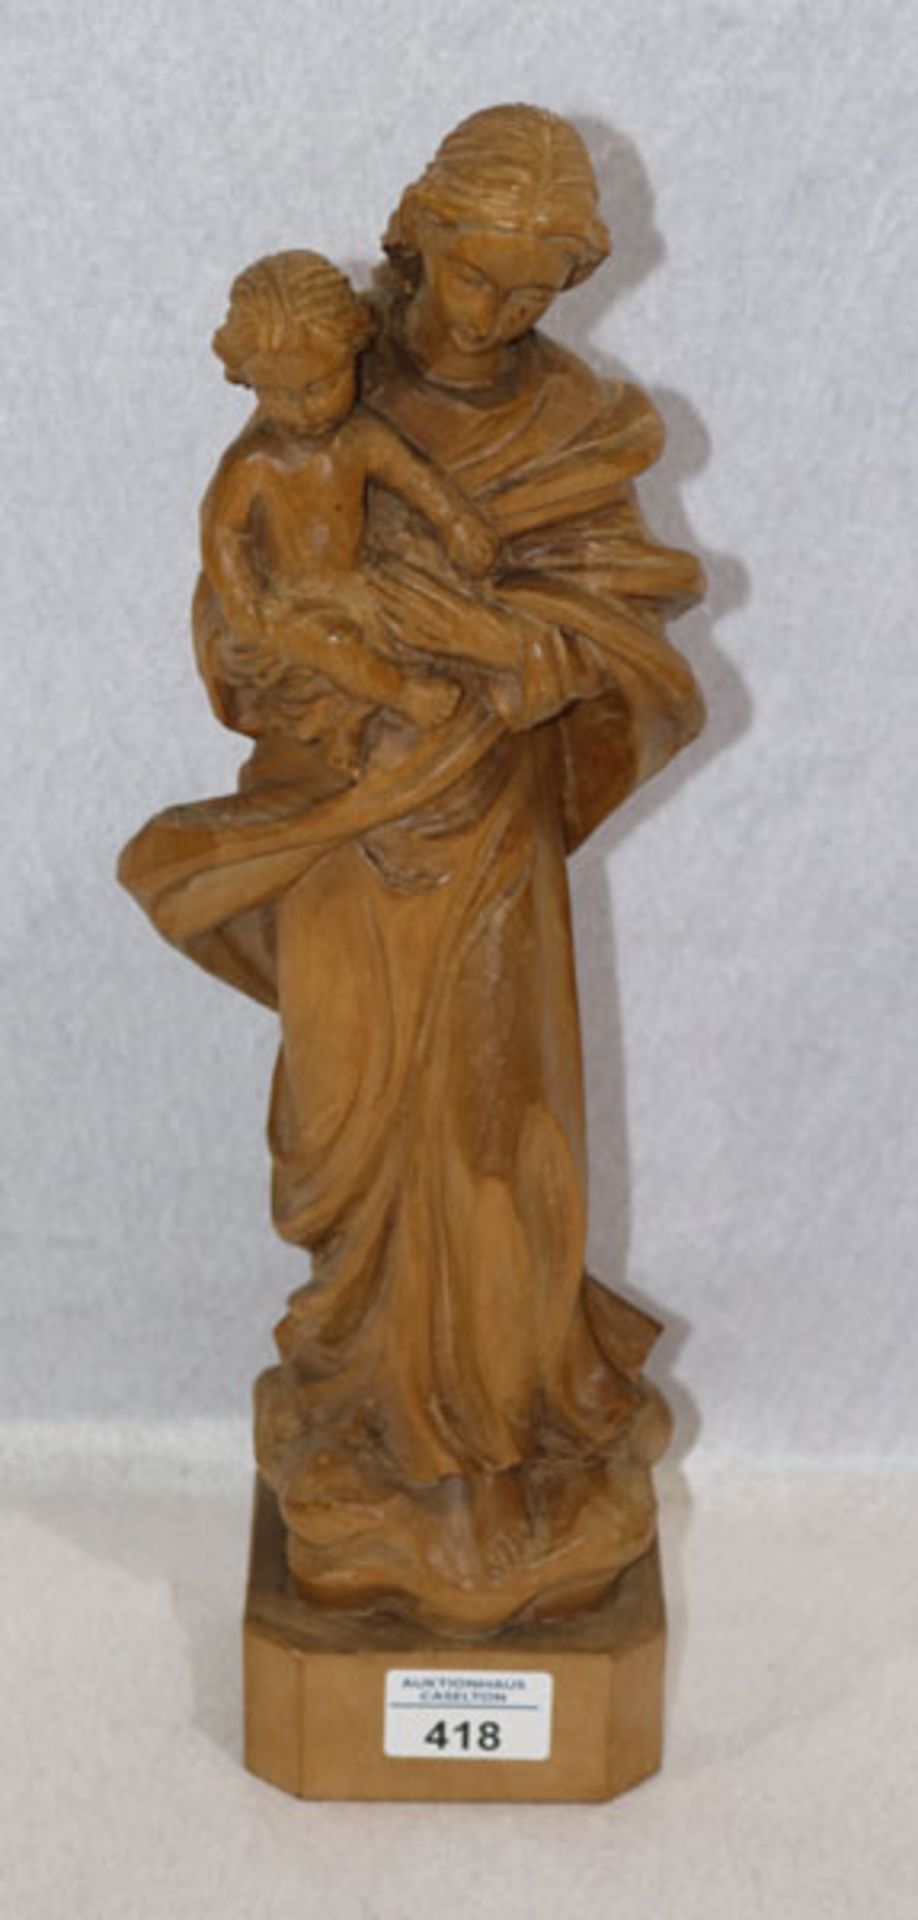 Holz Figurenskulptur 'Maria mit Kind', gebeizt, H 39,5 cm